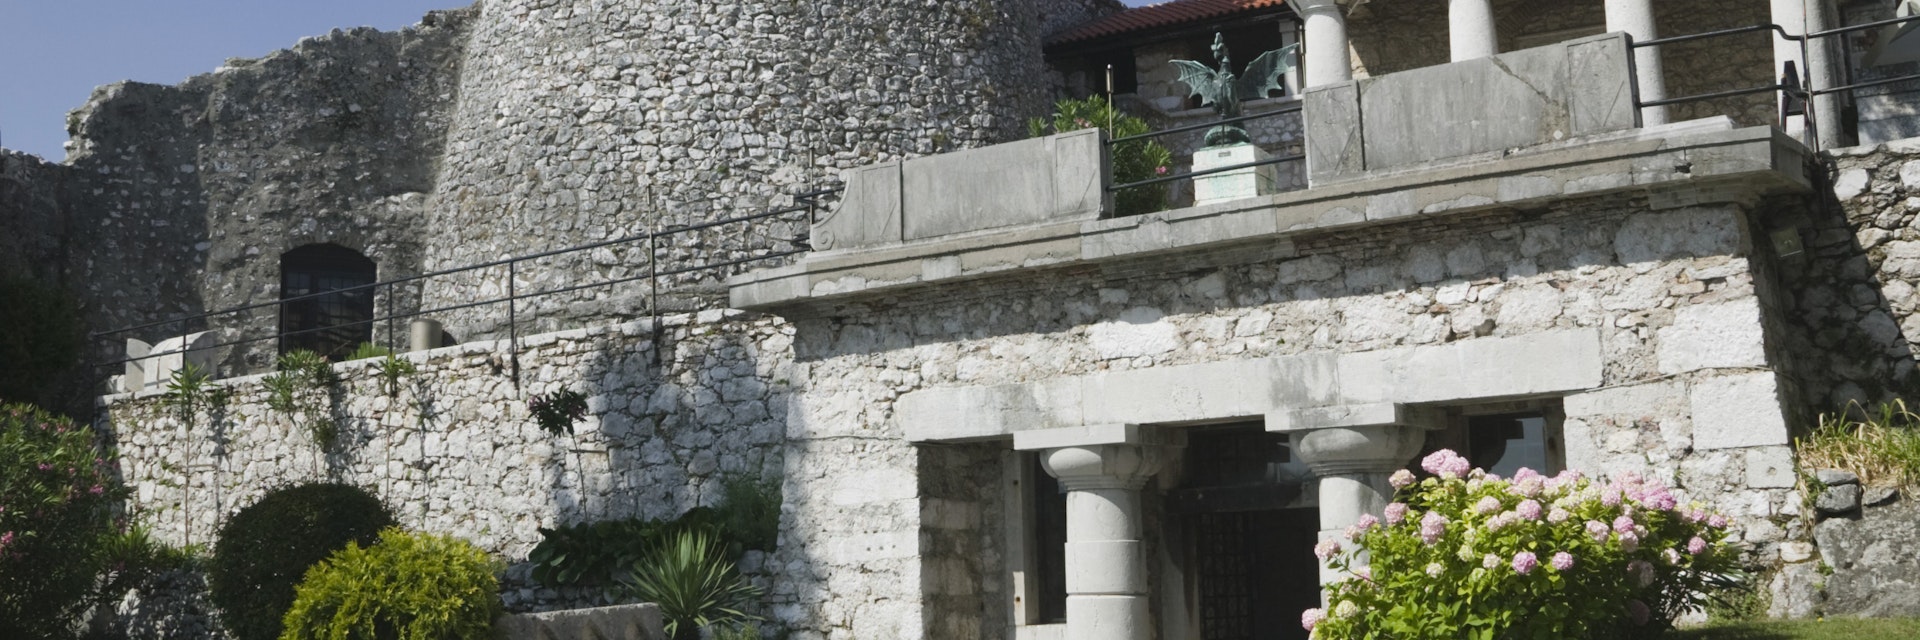 Trsat Castle, fort interior courtyard, Rijeka, Kvarner Region, Croatia